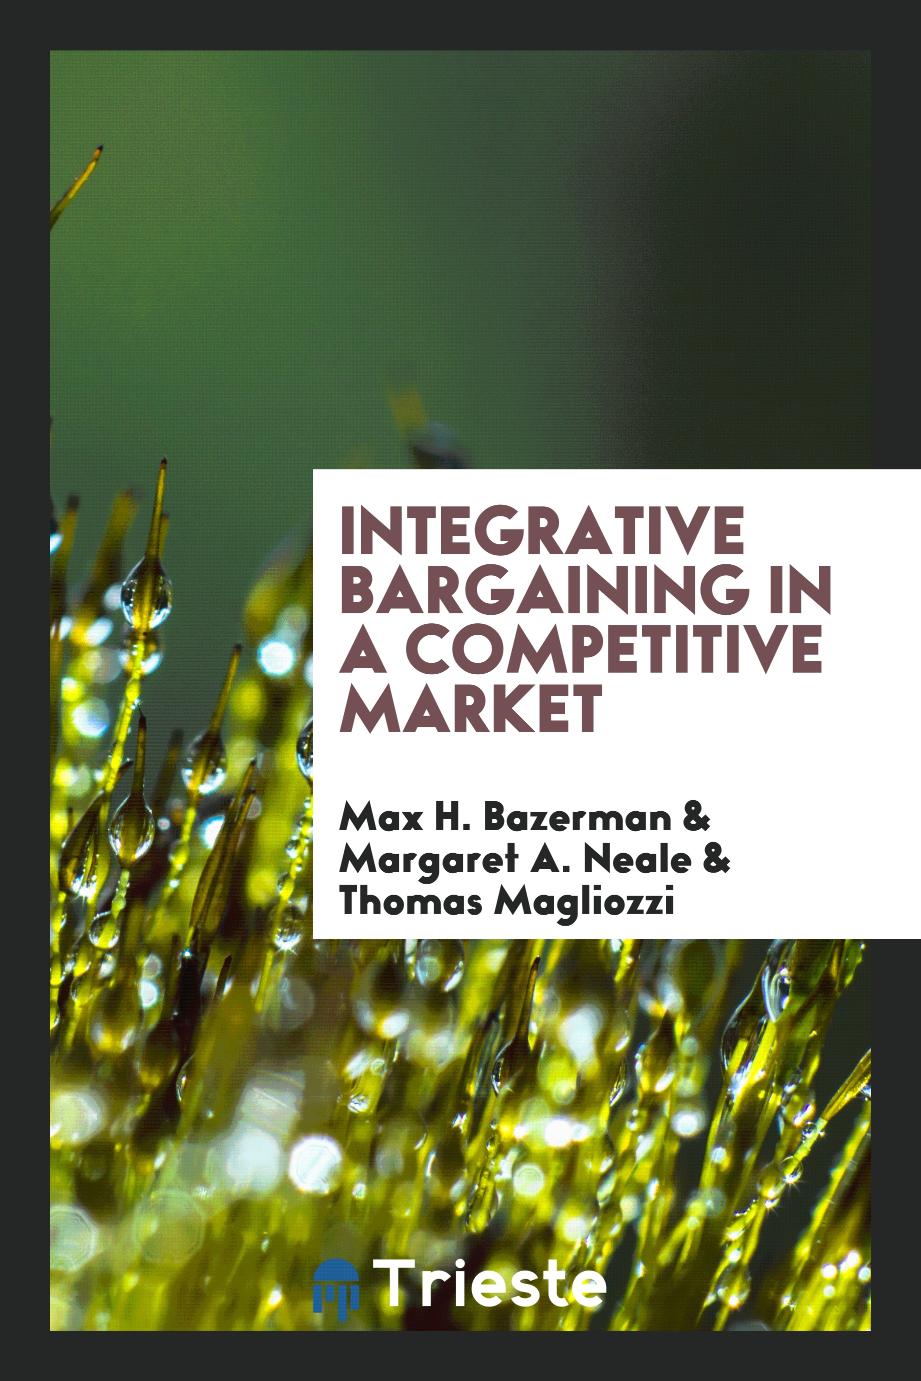 Max H. Bazerman, Margaret A. Neale, Thomas Magliozzi - Integrative bargaining in a competitive market